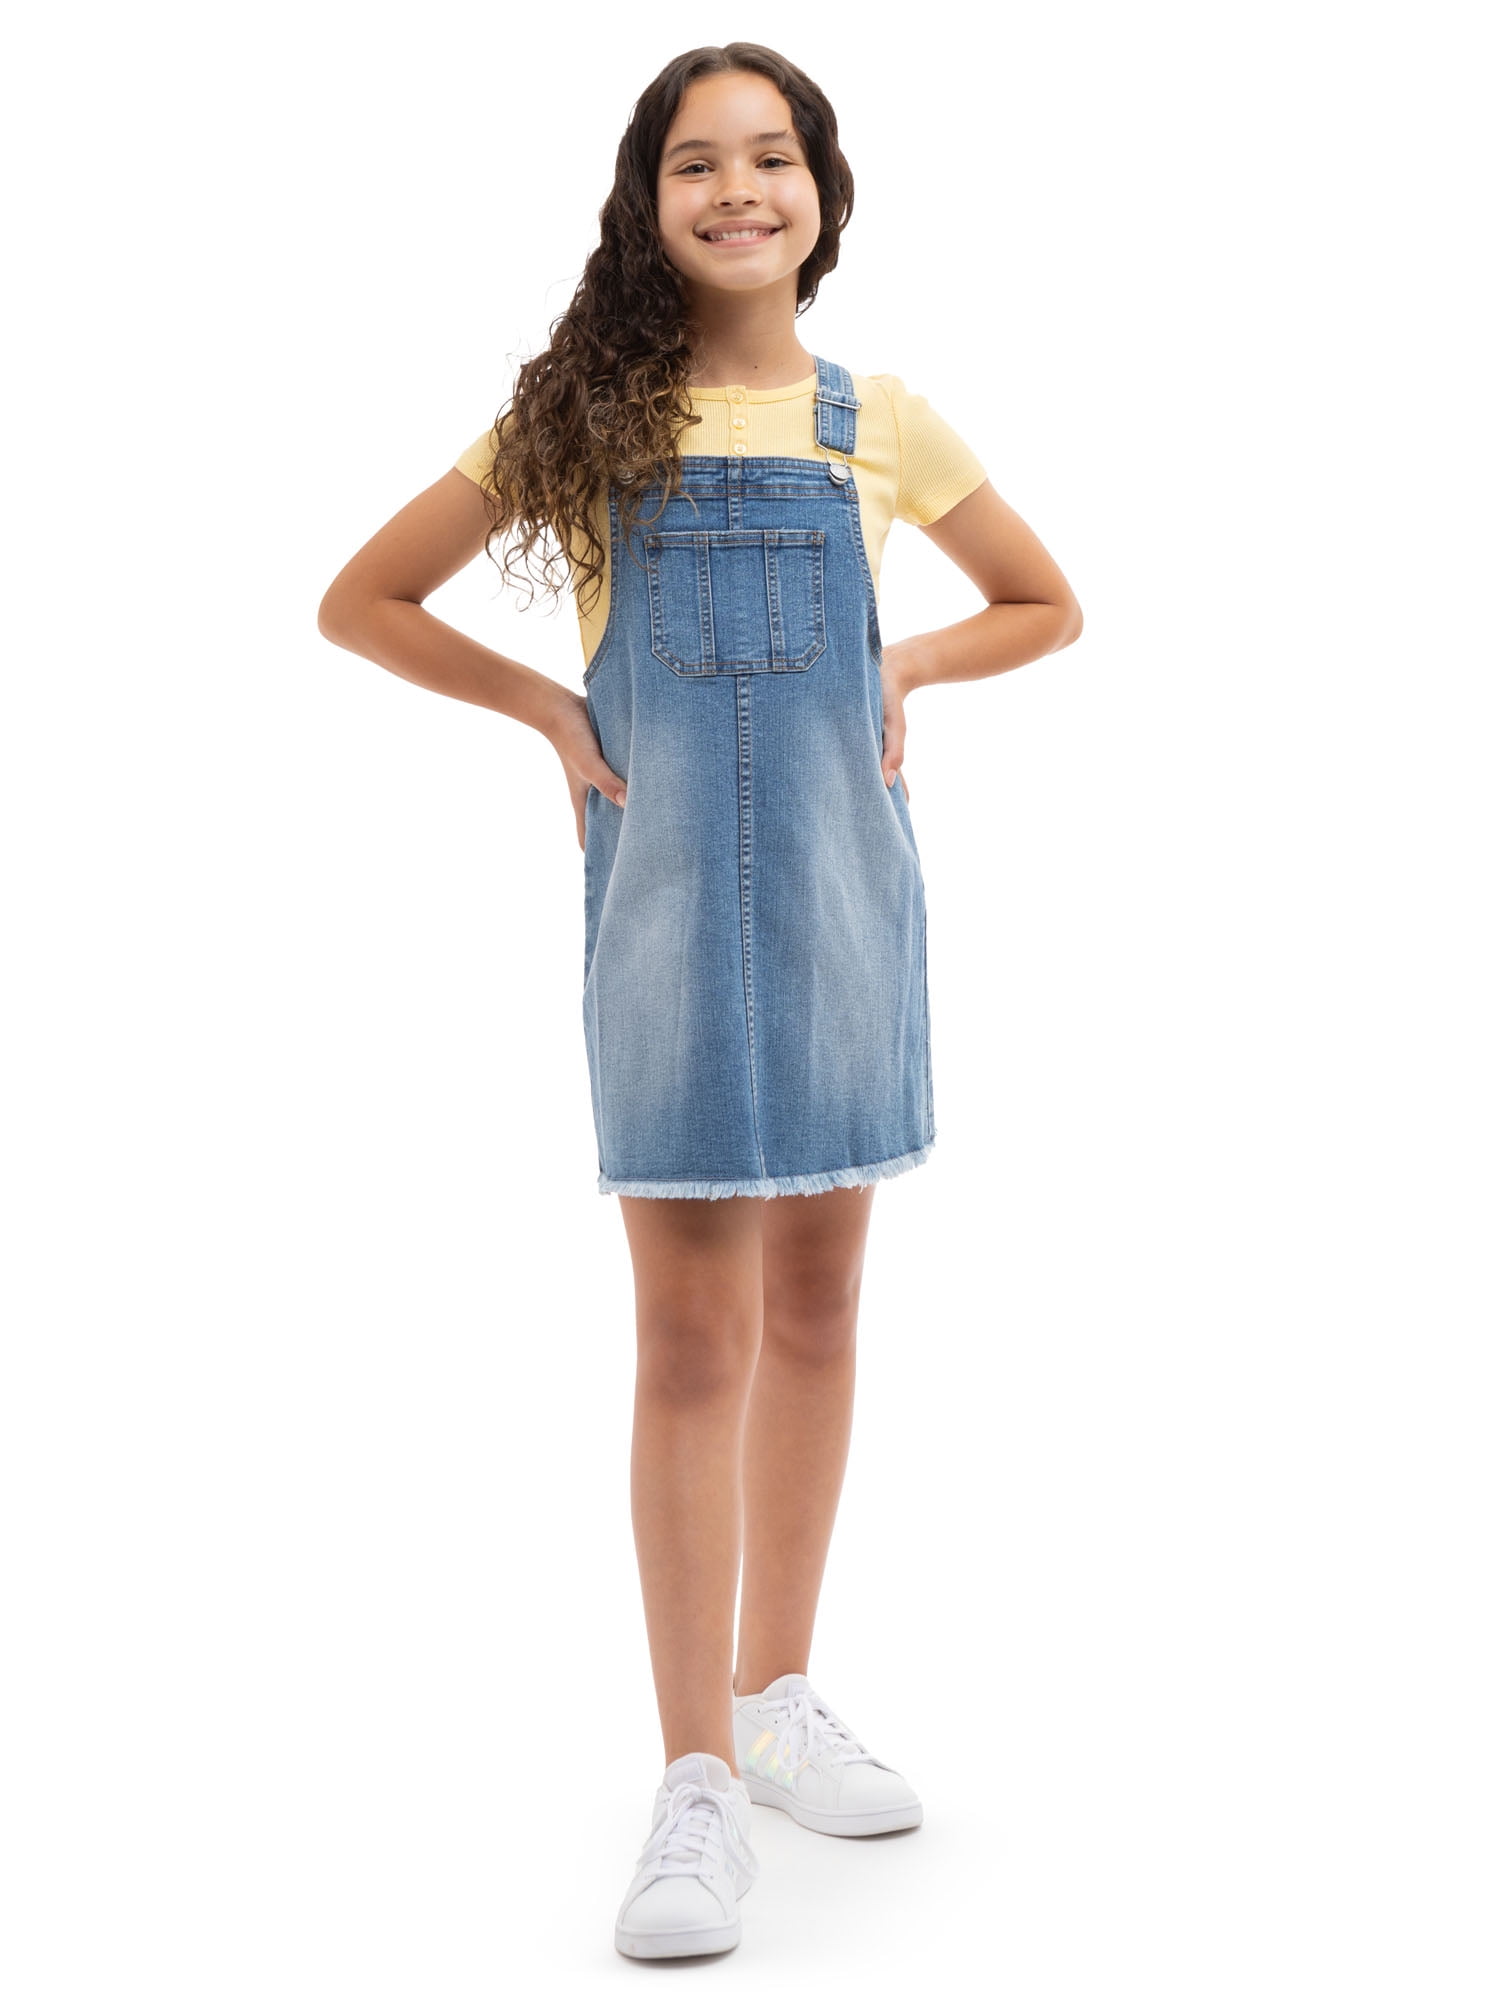 Caitzr Kids Baby Girls Denim Dress Blue Long Sleeve Jeans Dresses -  Walmart.com